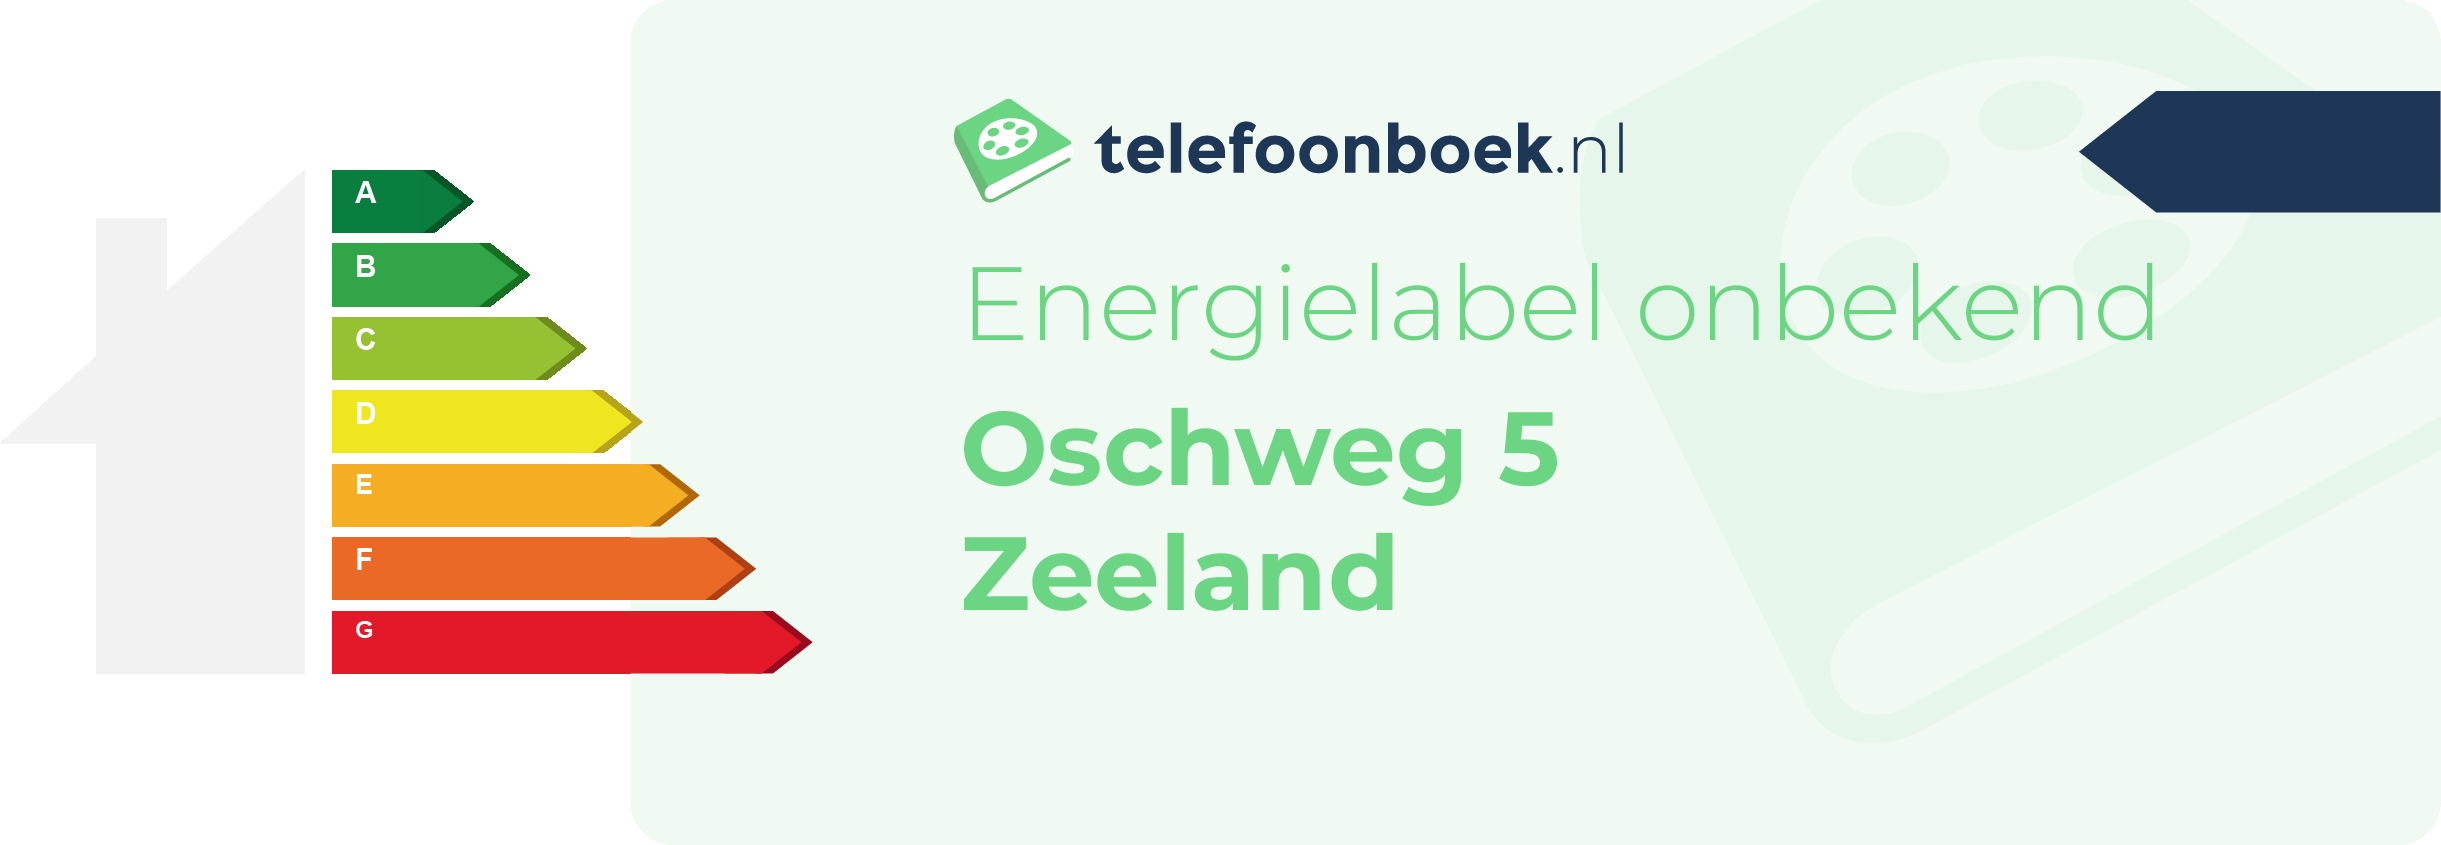 Energielabel Oschweg 5 Zeeland